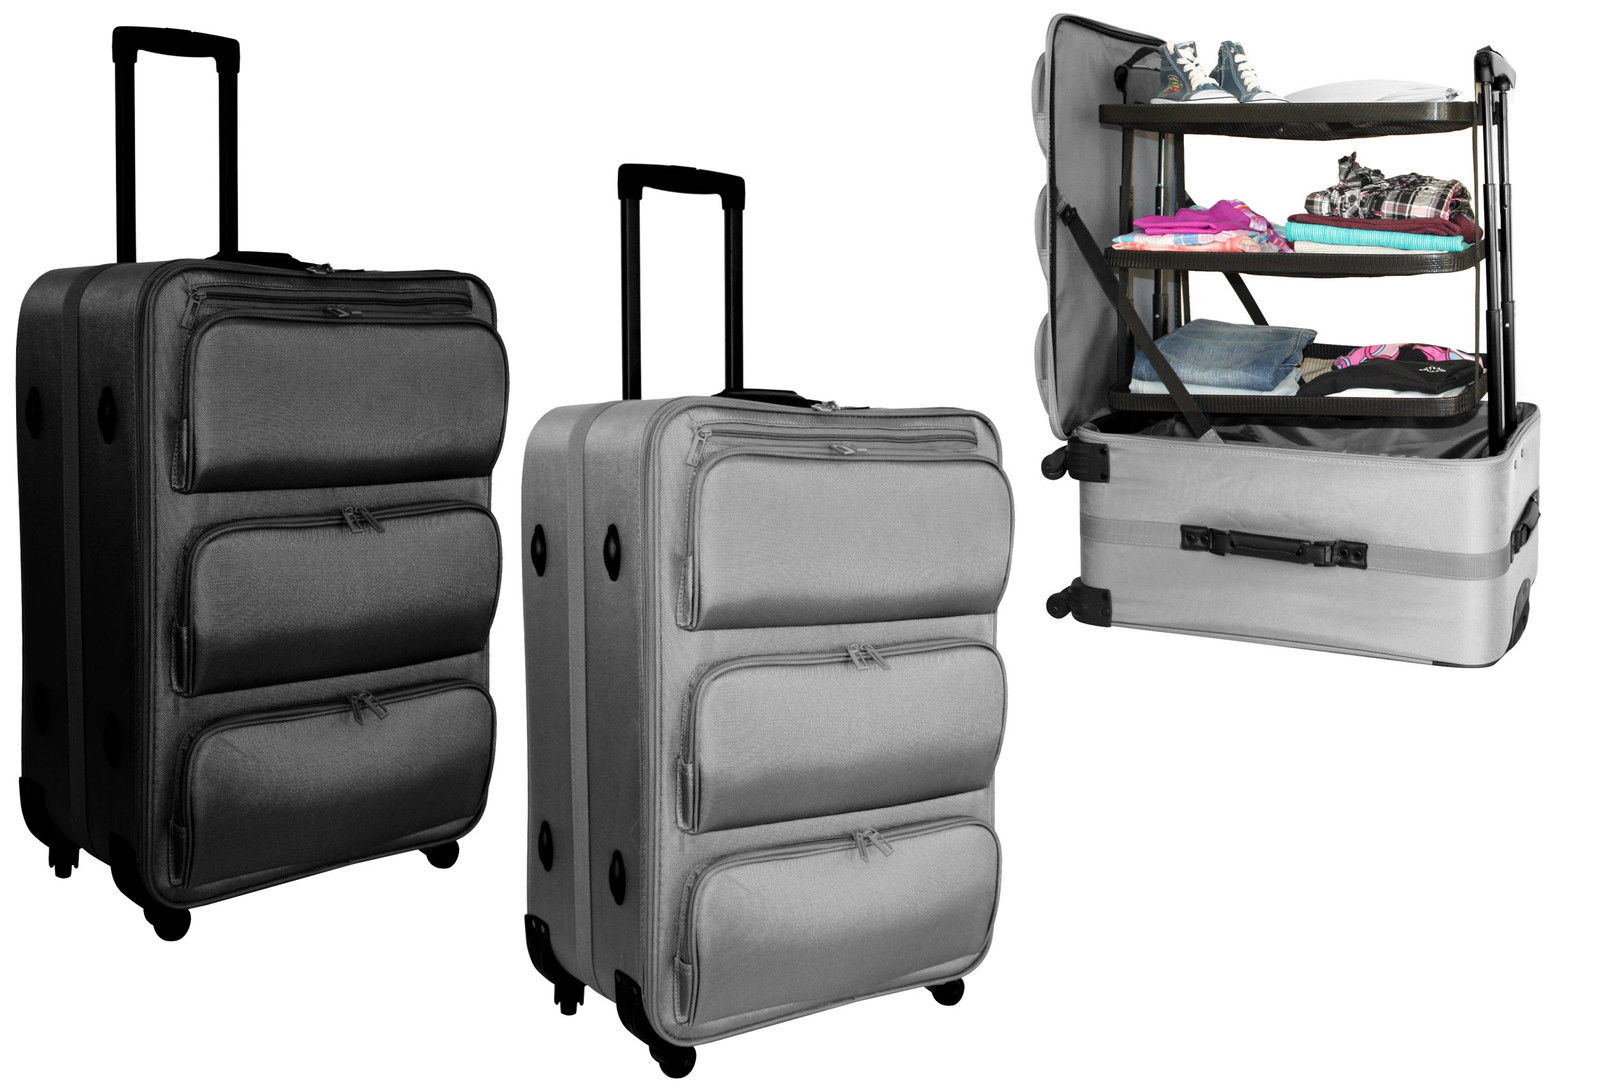 XL Koffer 60L Trolley Reisekoffer 71cm Reise Gepäck + Regalsystem herausnehmbar